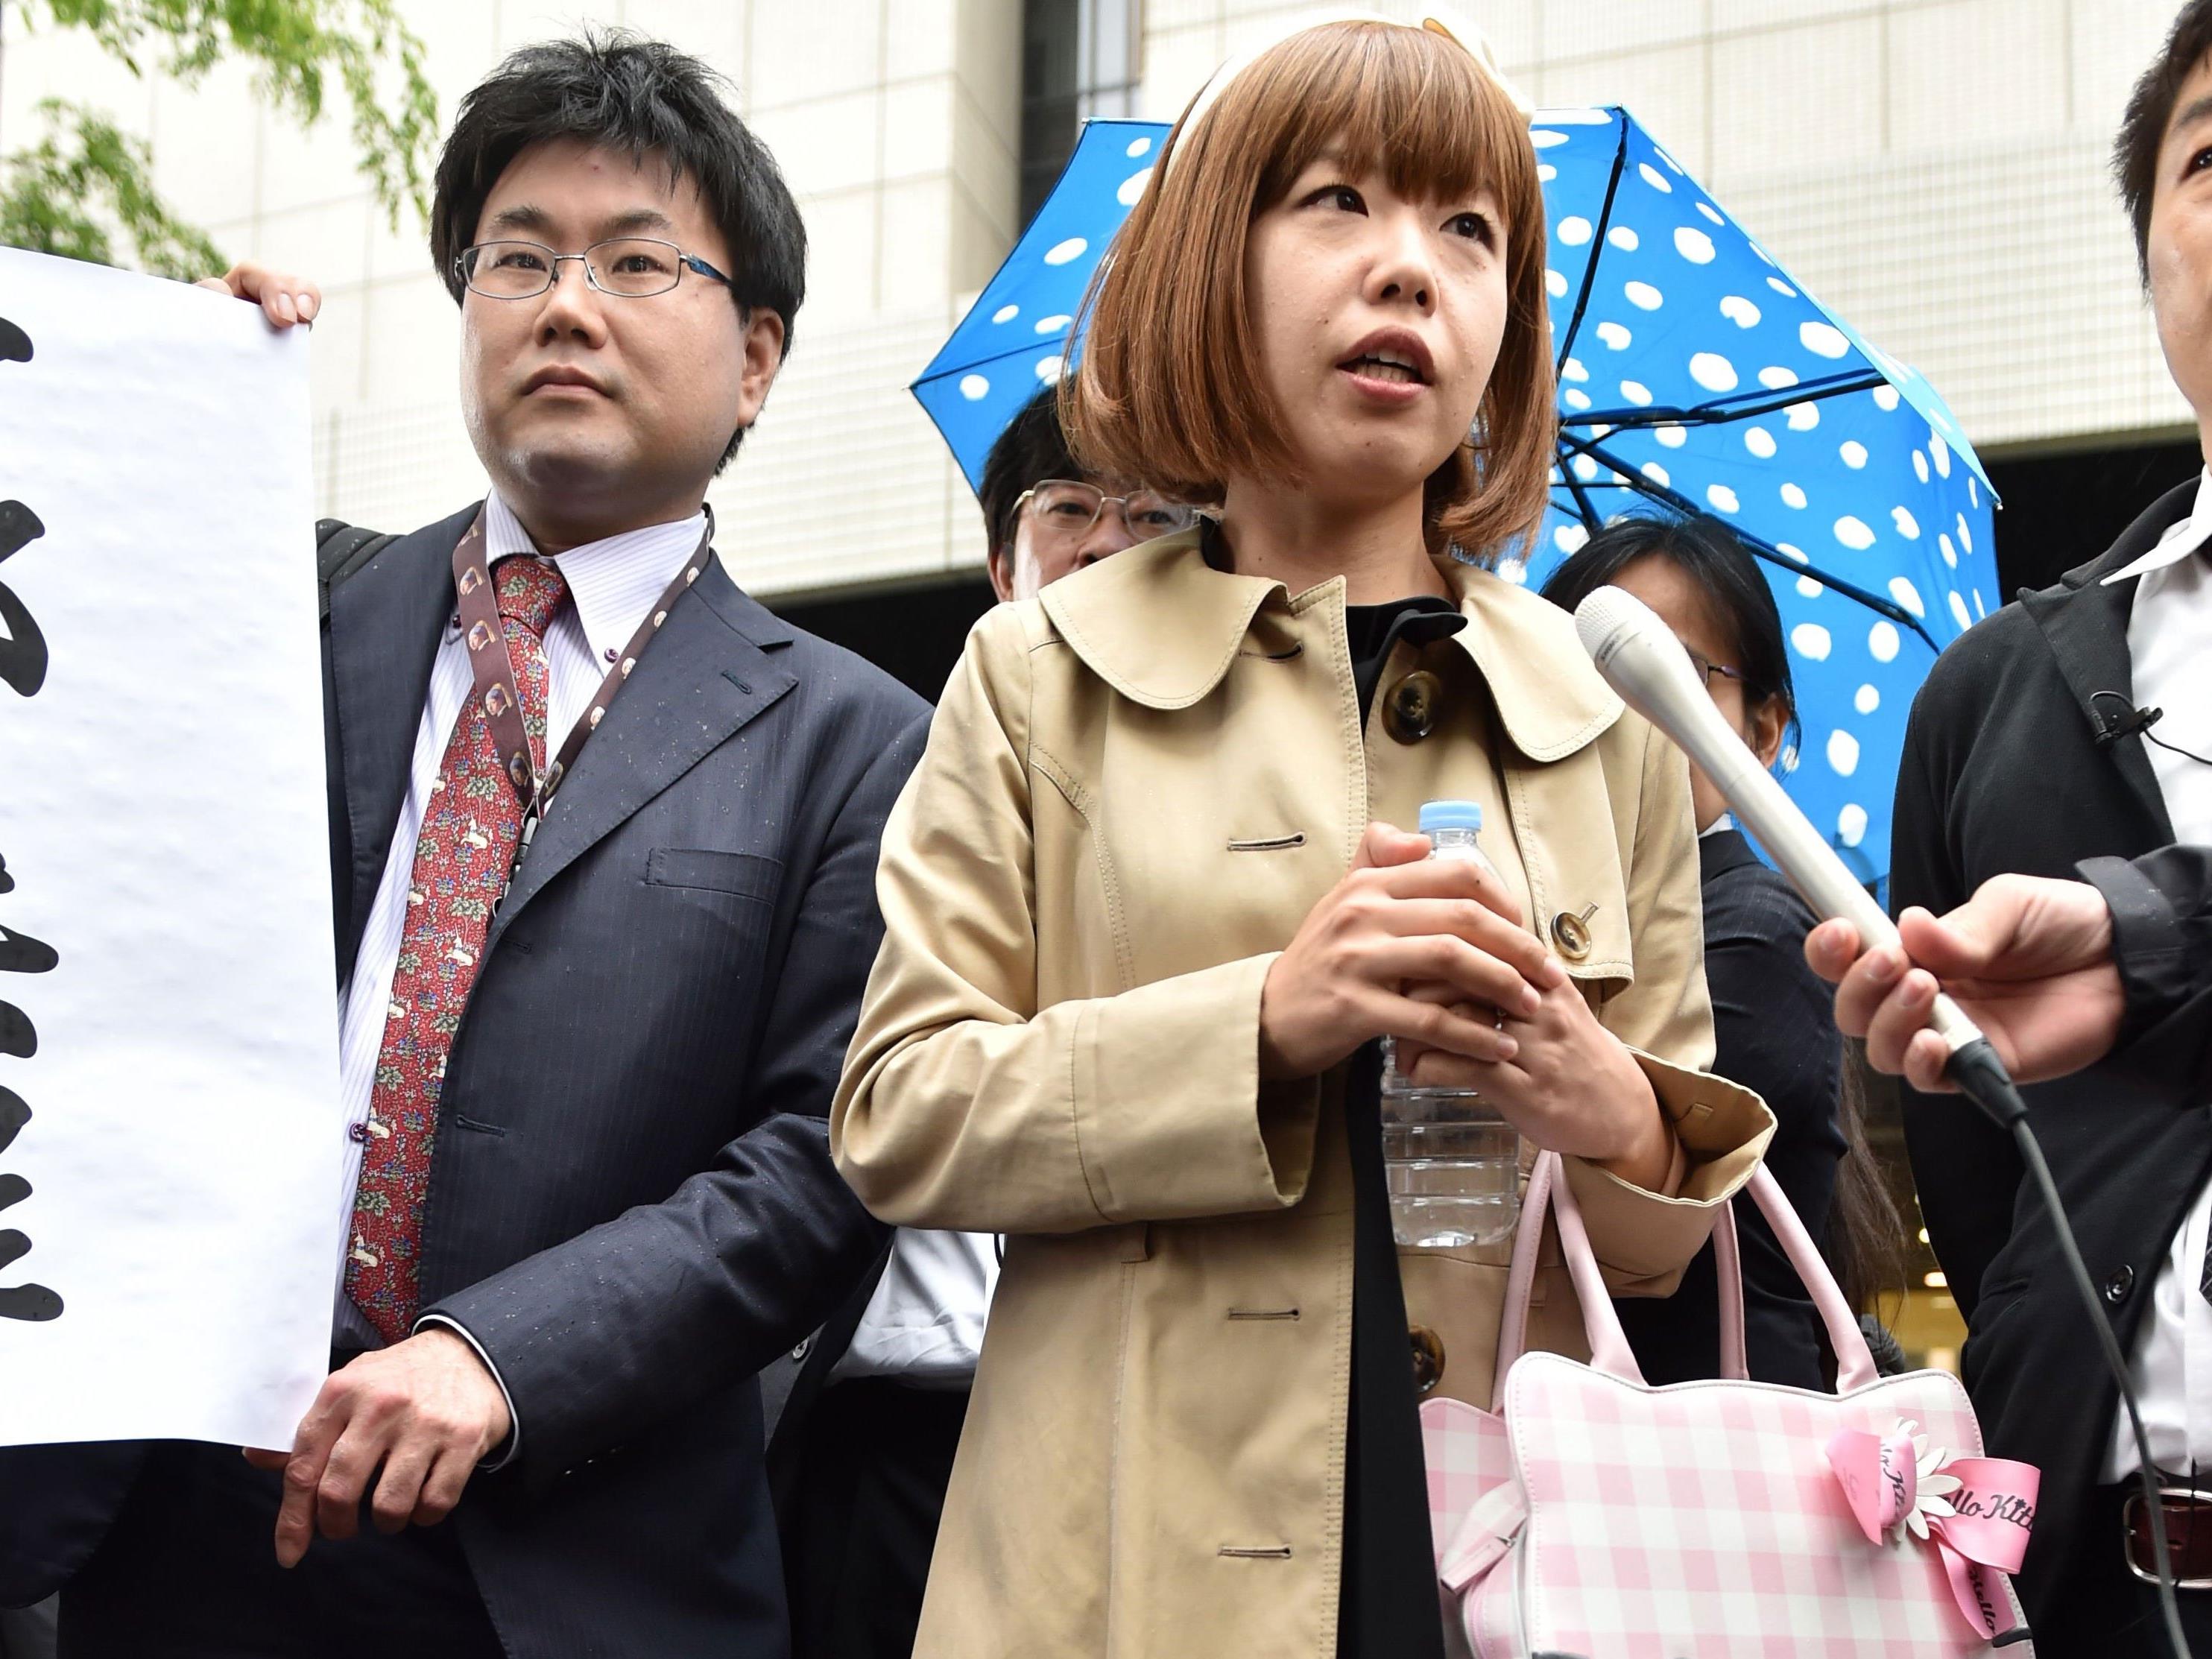 Fall um "Vagina-Künstlerin" Megumi Igarashi löste scharfe Zensur-Debatte in Japan aus.